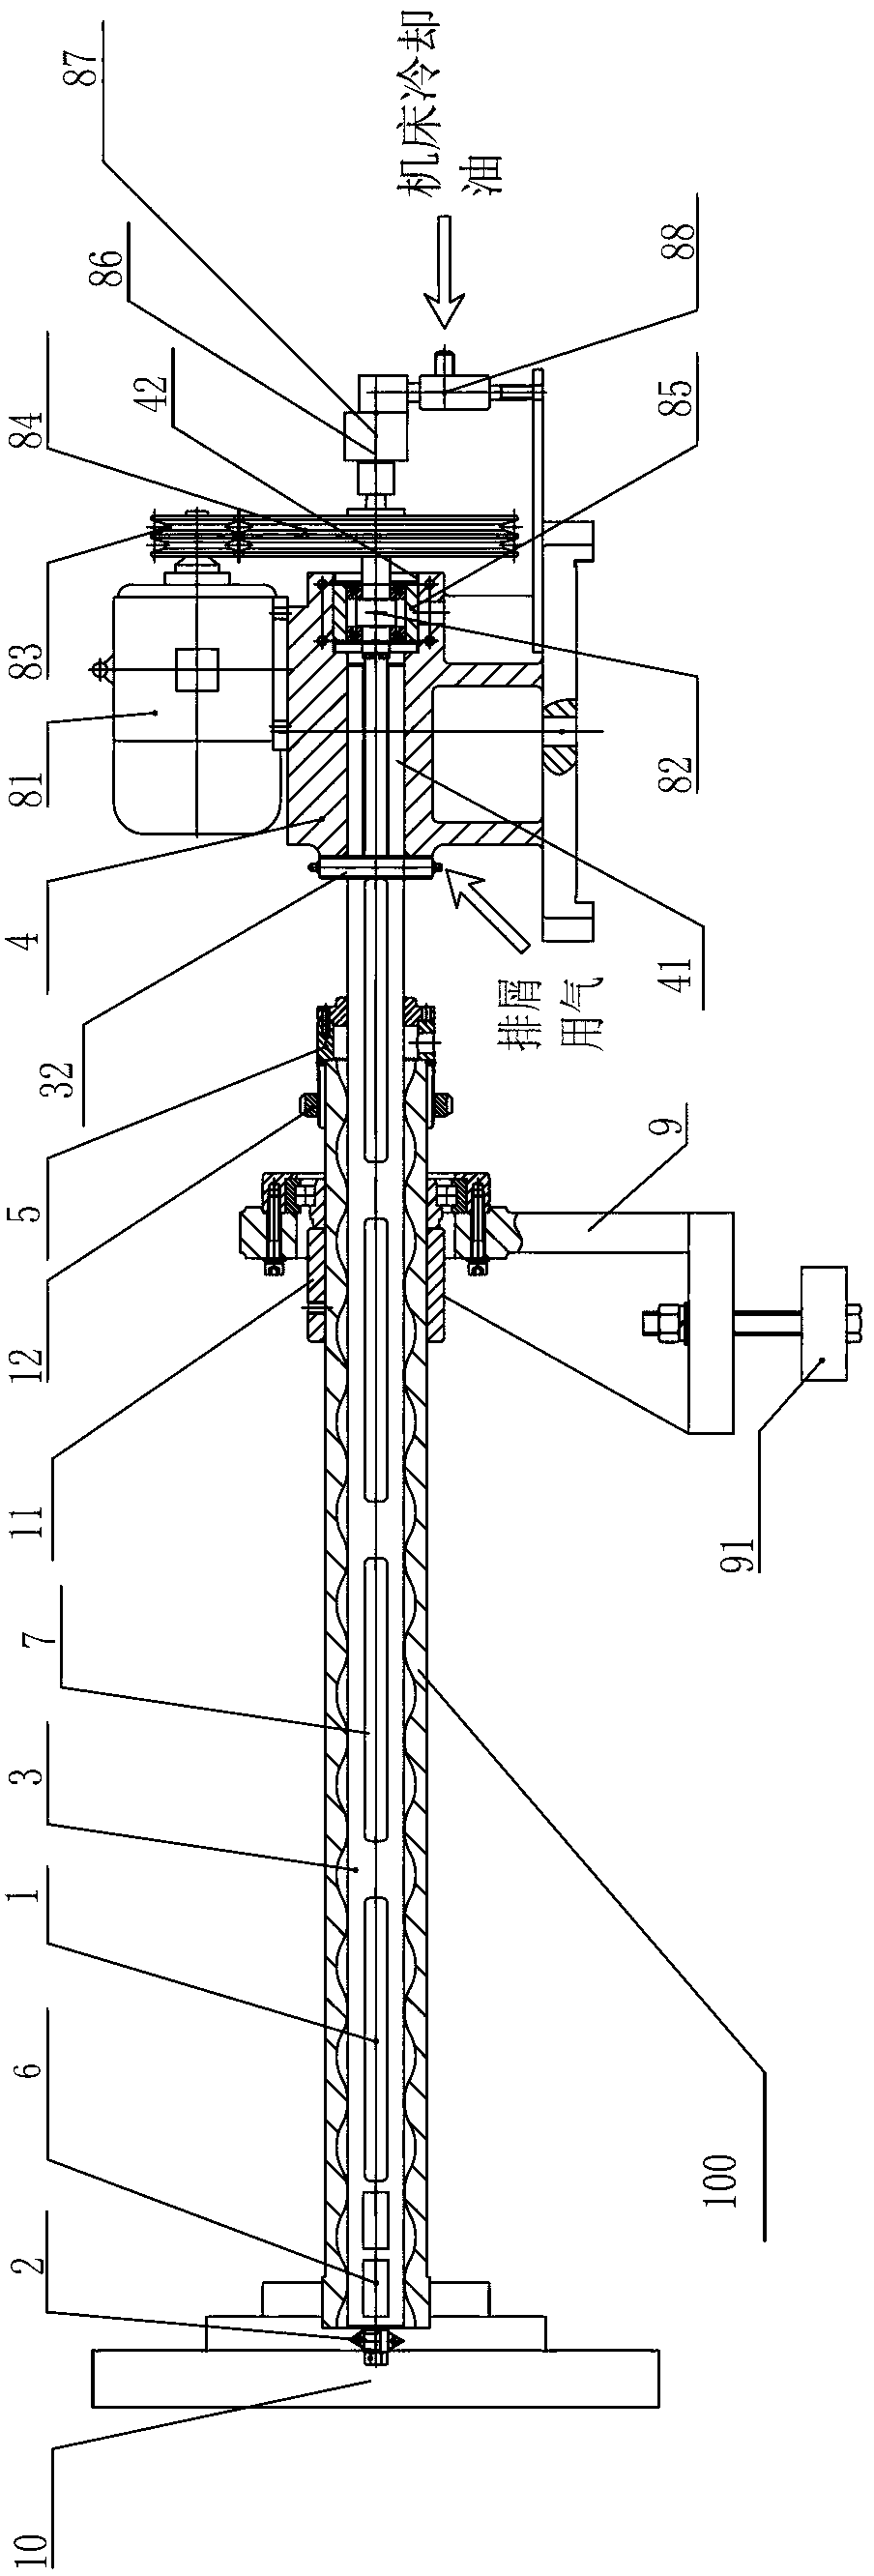 All-metal screw pump stator machining equipment